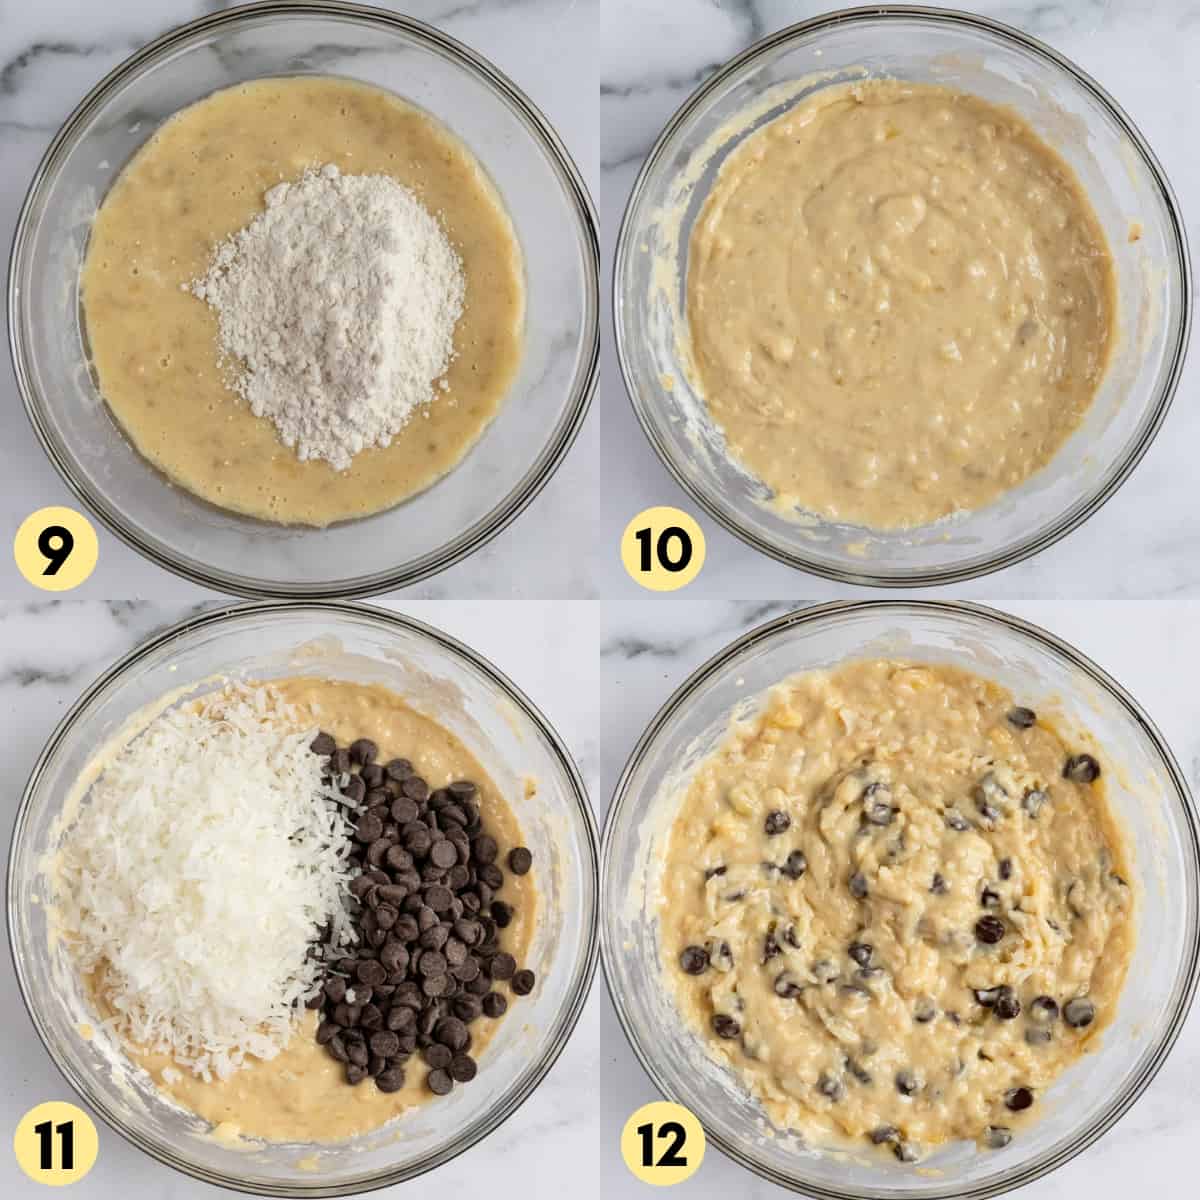 Process shots of recipe 9 through 12.